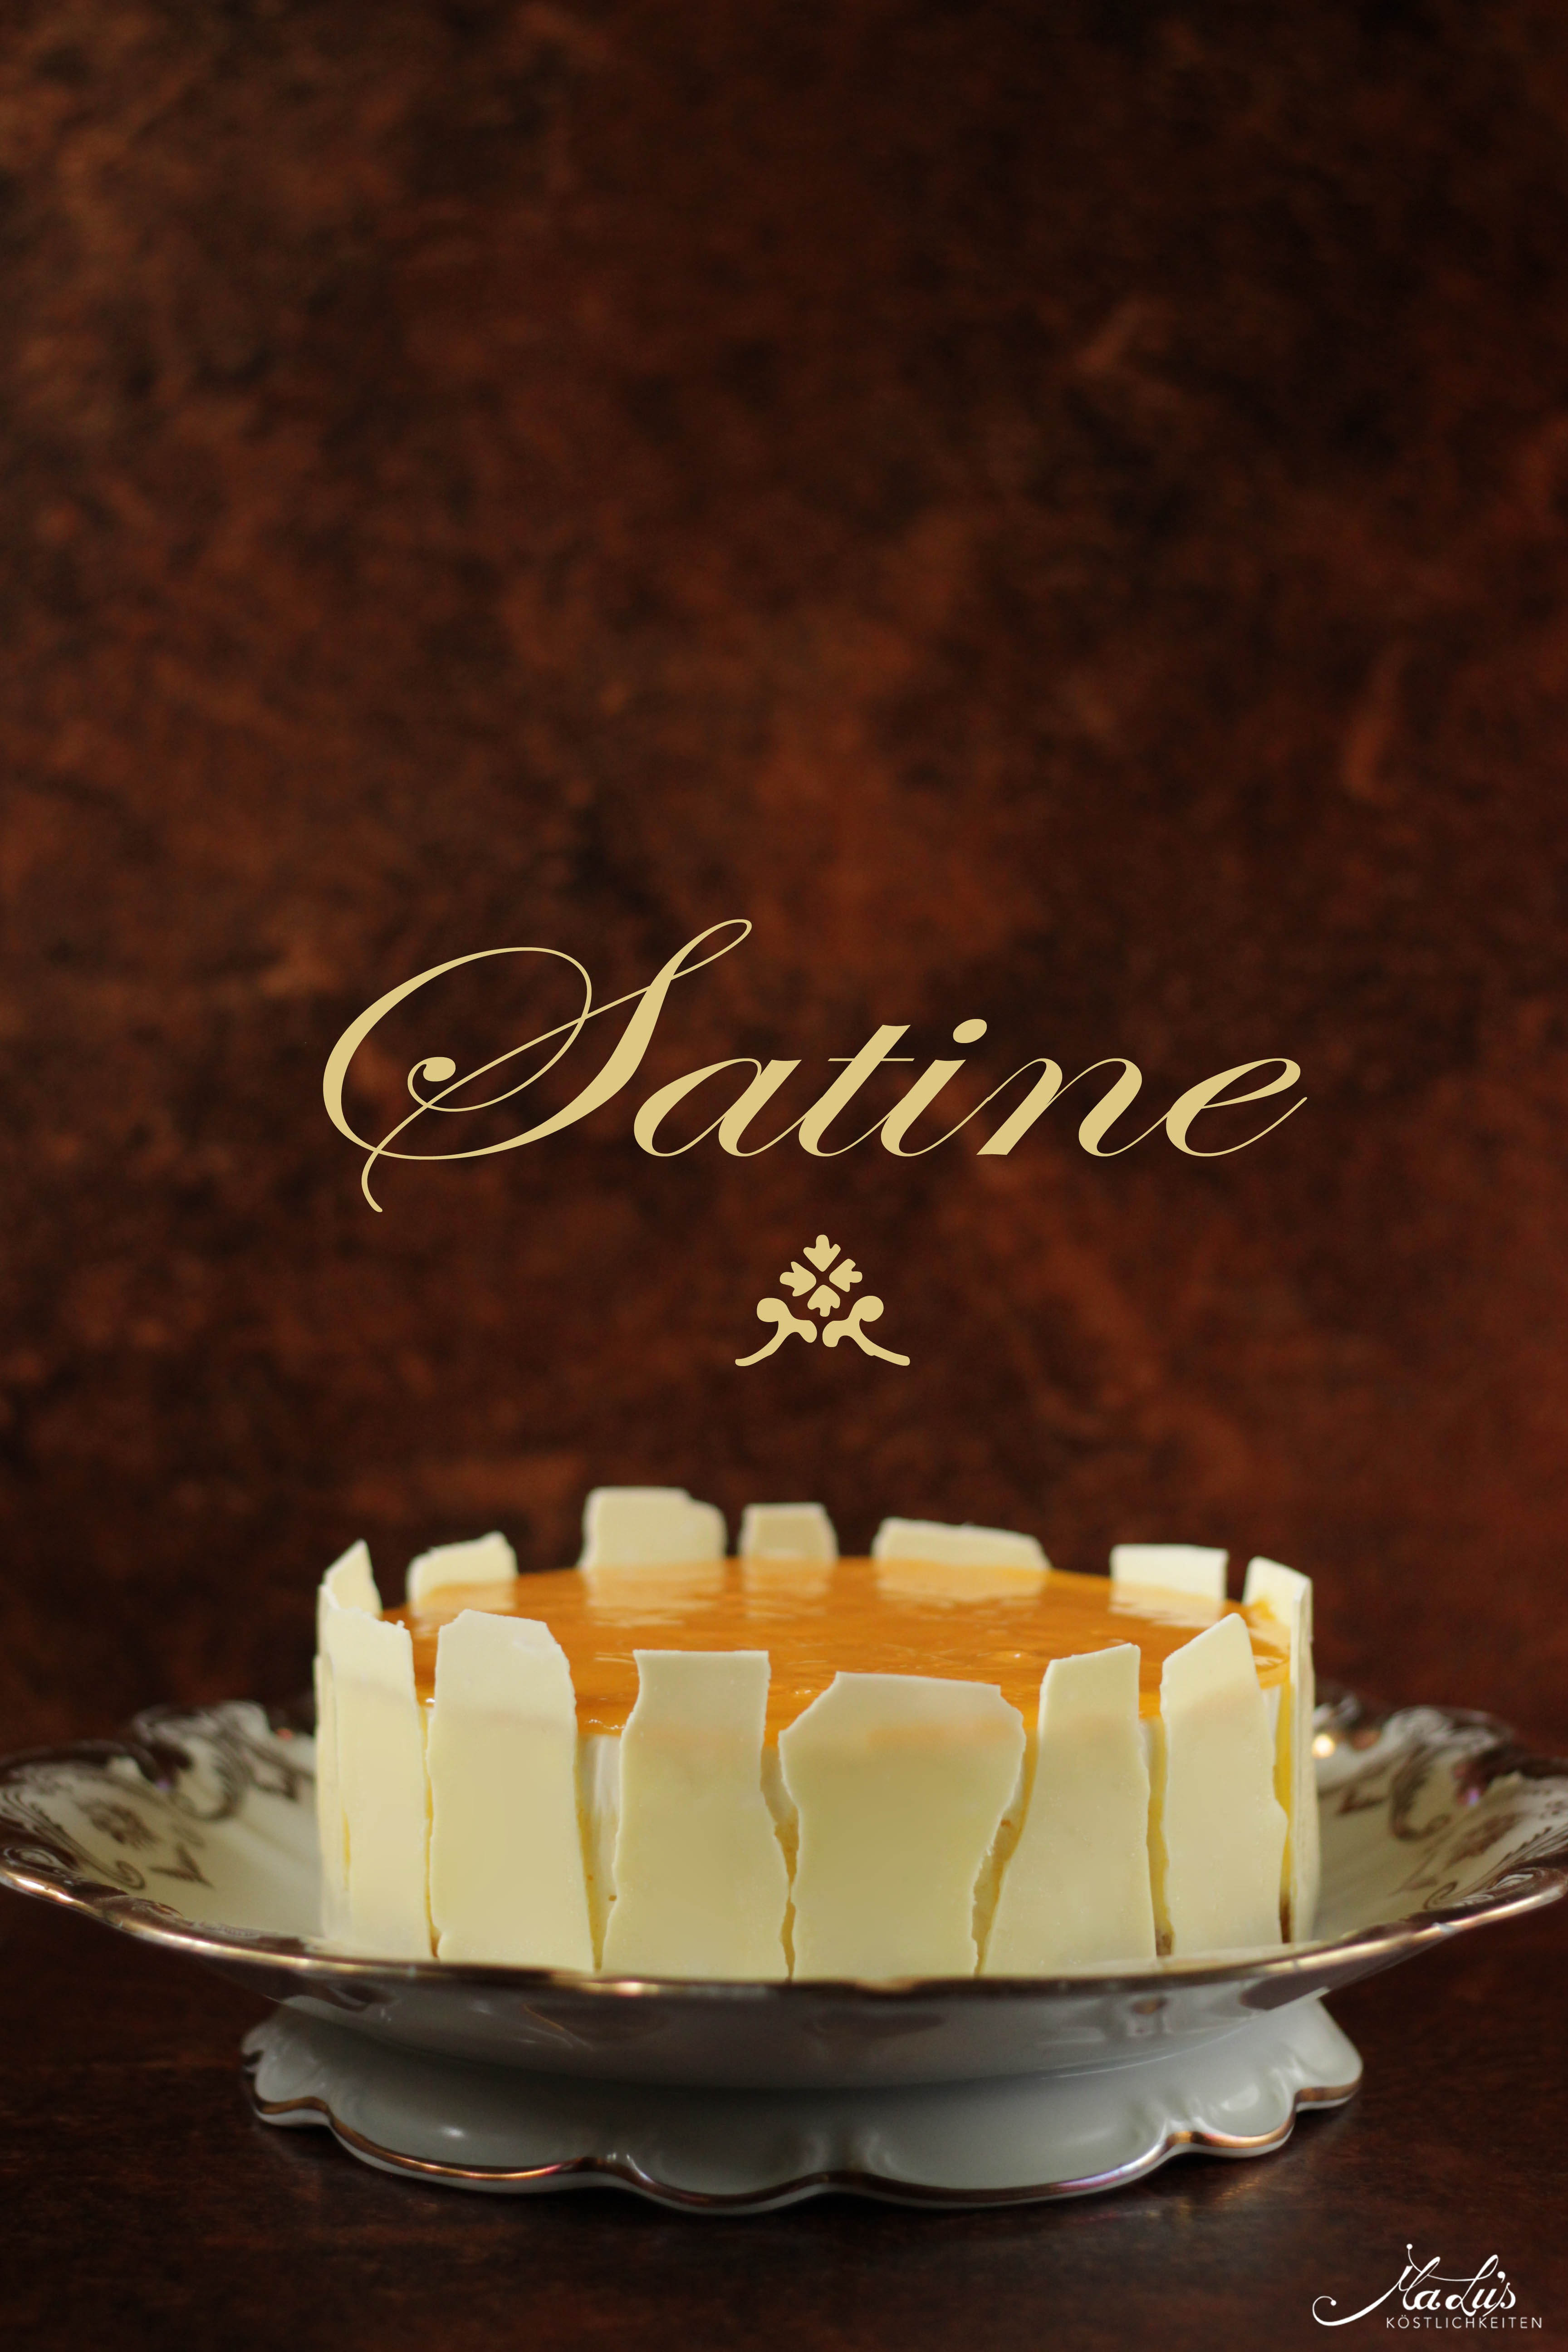 satine-cheesecake-1a